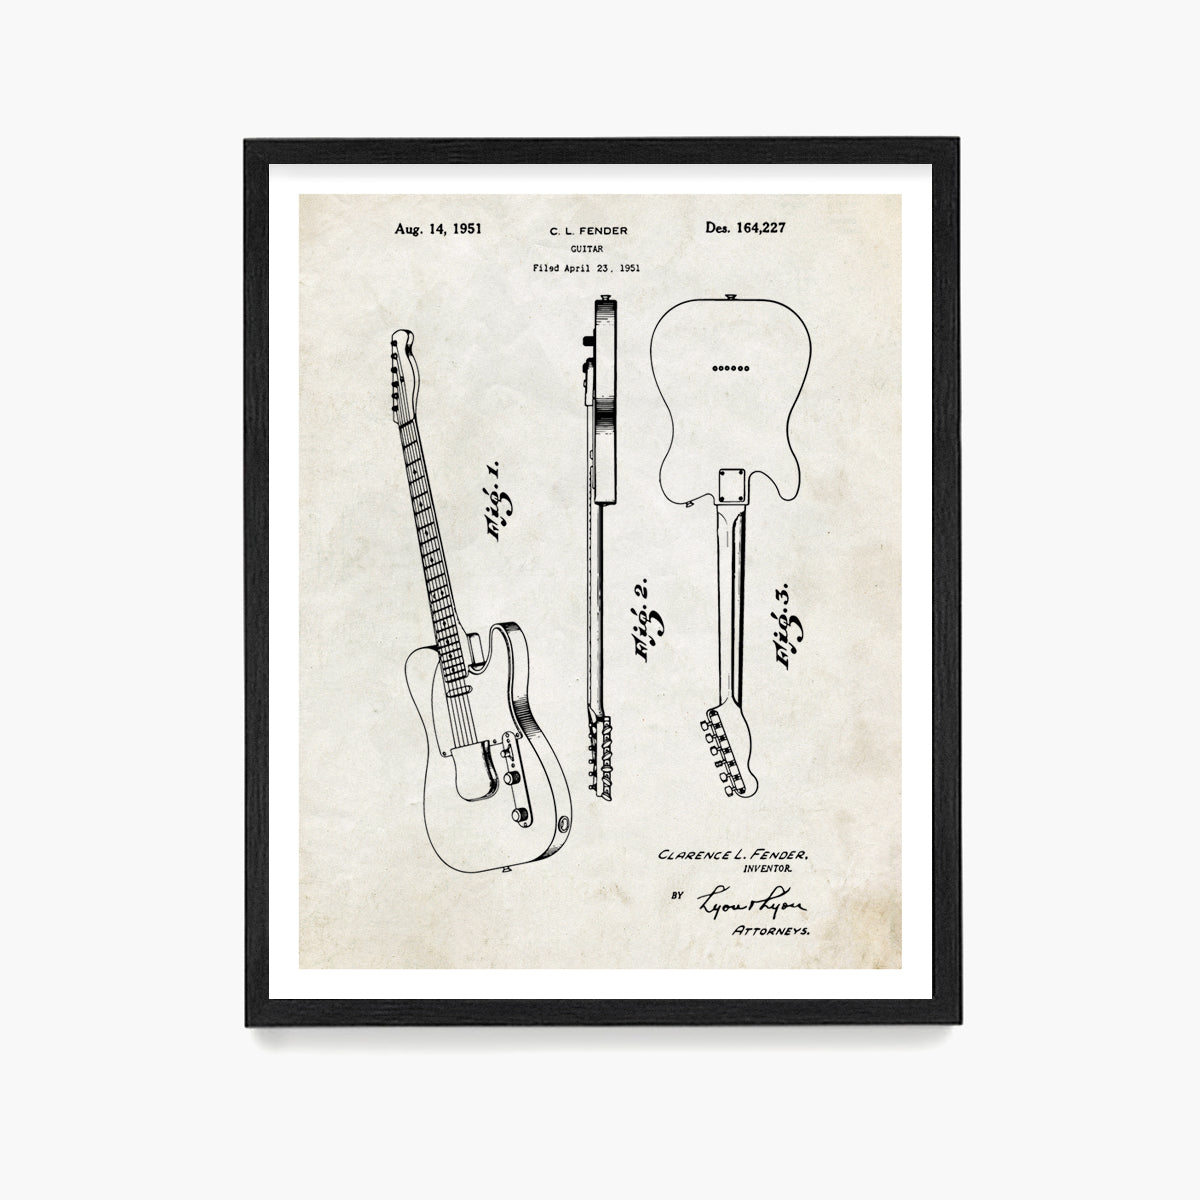 Fender Telecaster Guitar Patent Poster, Guitar Patent Wall Art